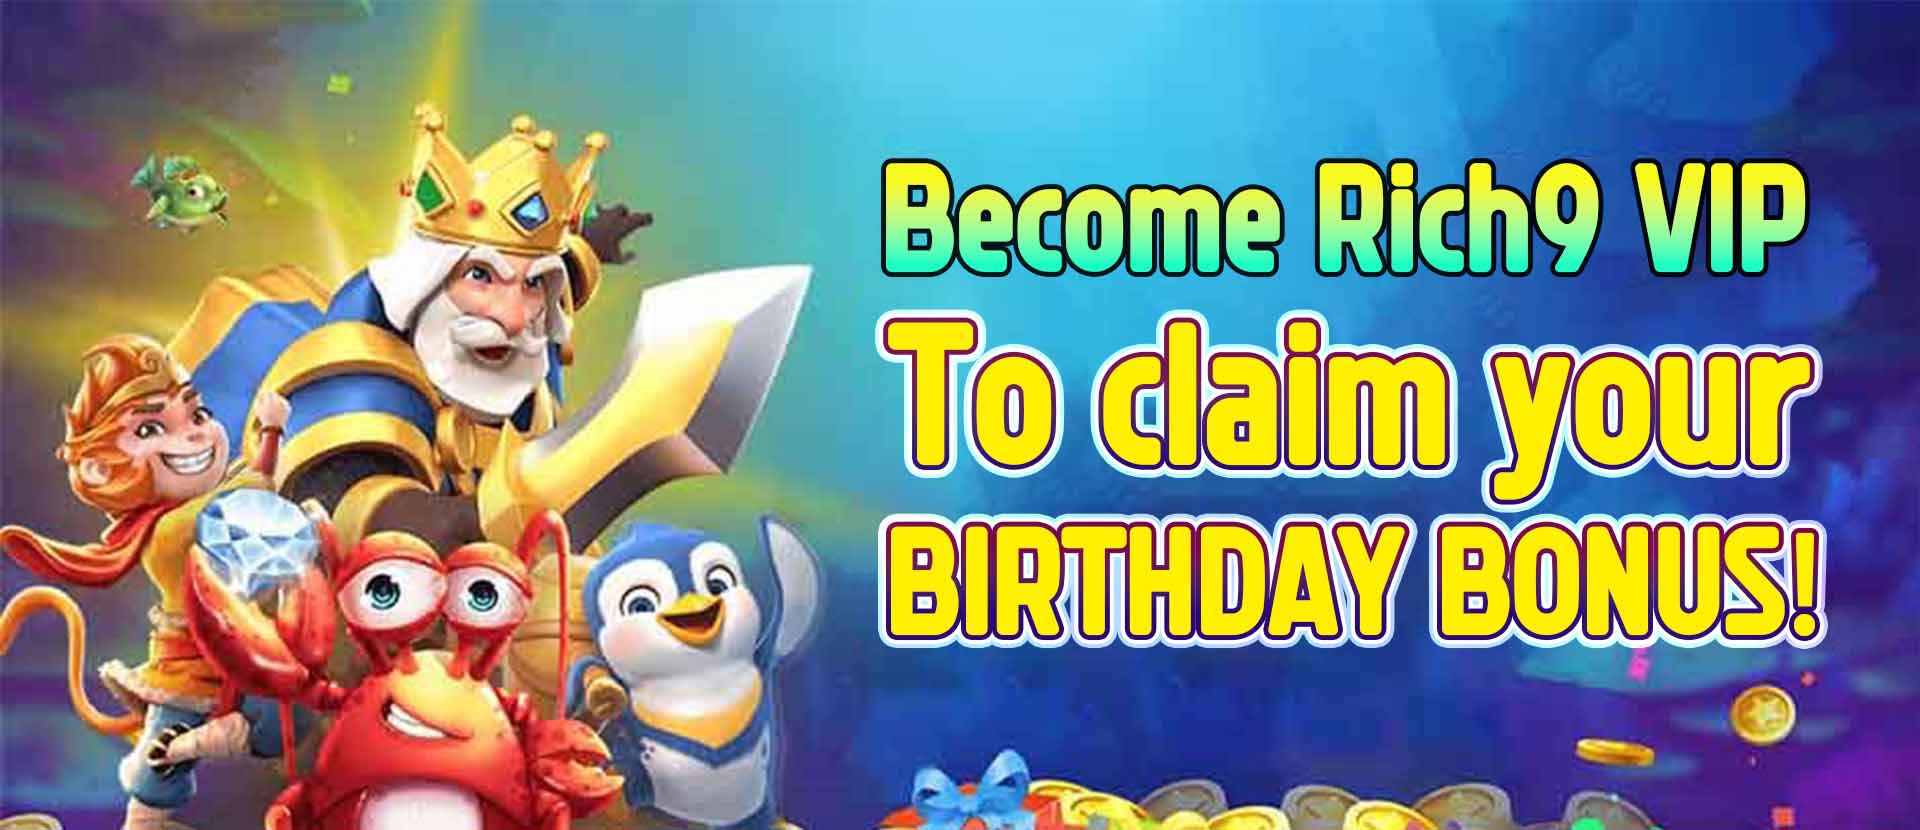 rich9_vip_birthday_bonus_banner